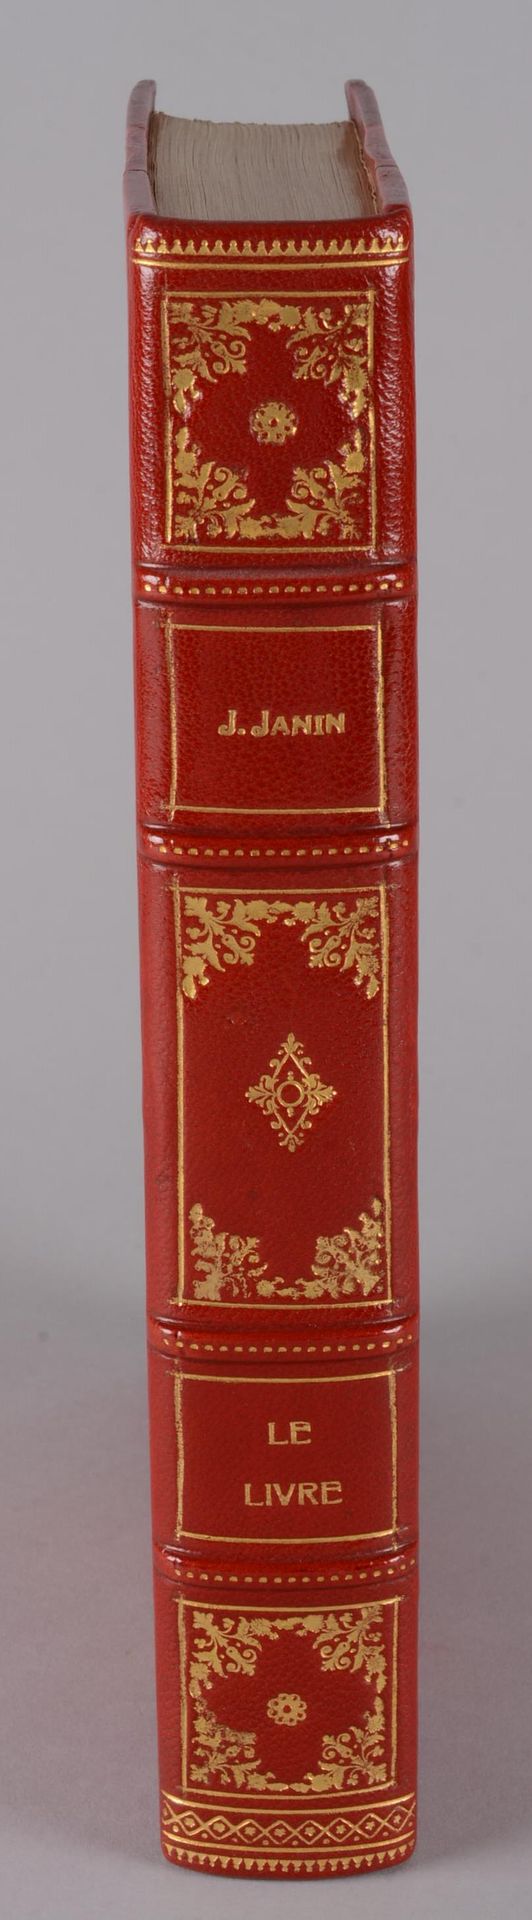 JANIN Jules JANIN Jules 



Le Livre



 Paris, Plon, 1870



 Grand in-8°. Demi&hellip;